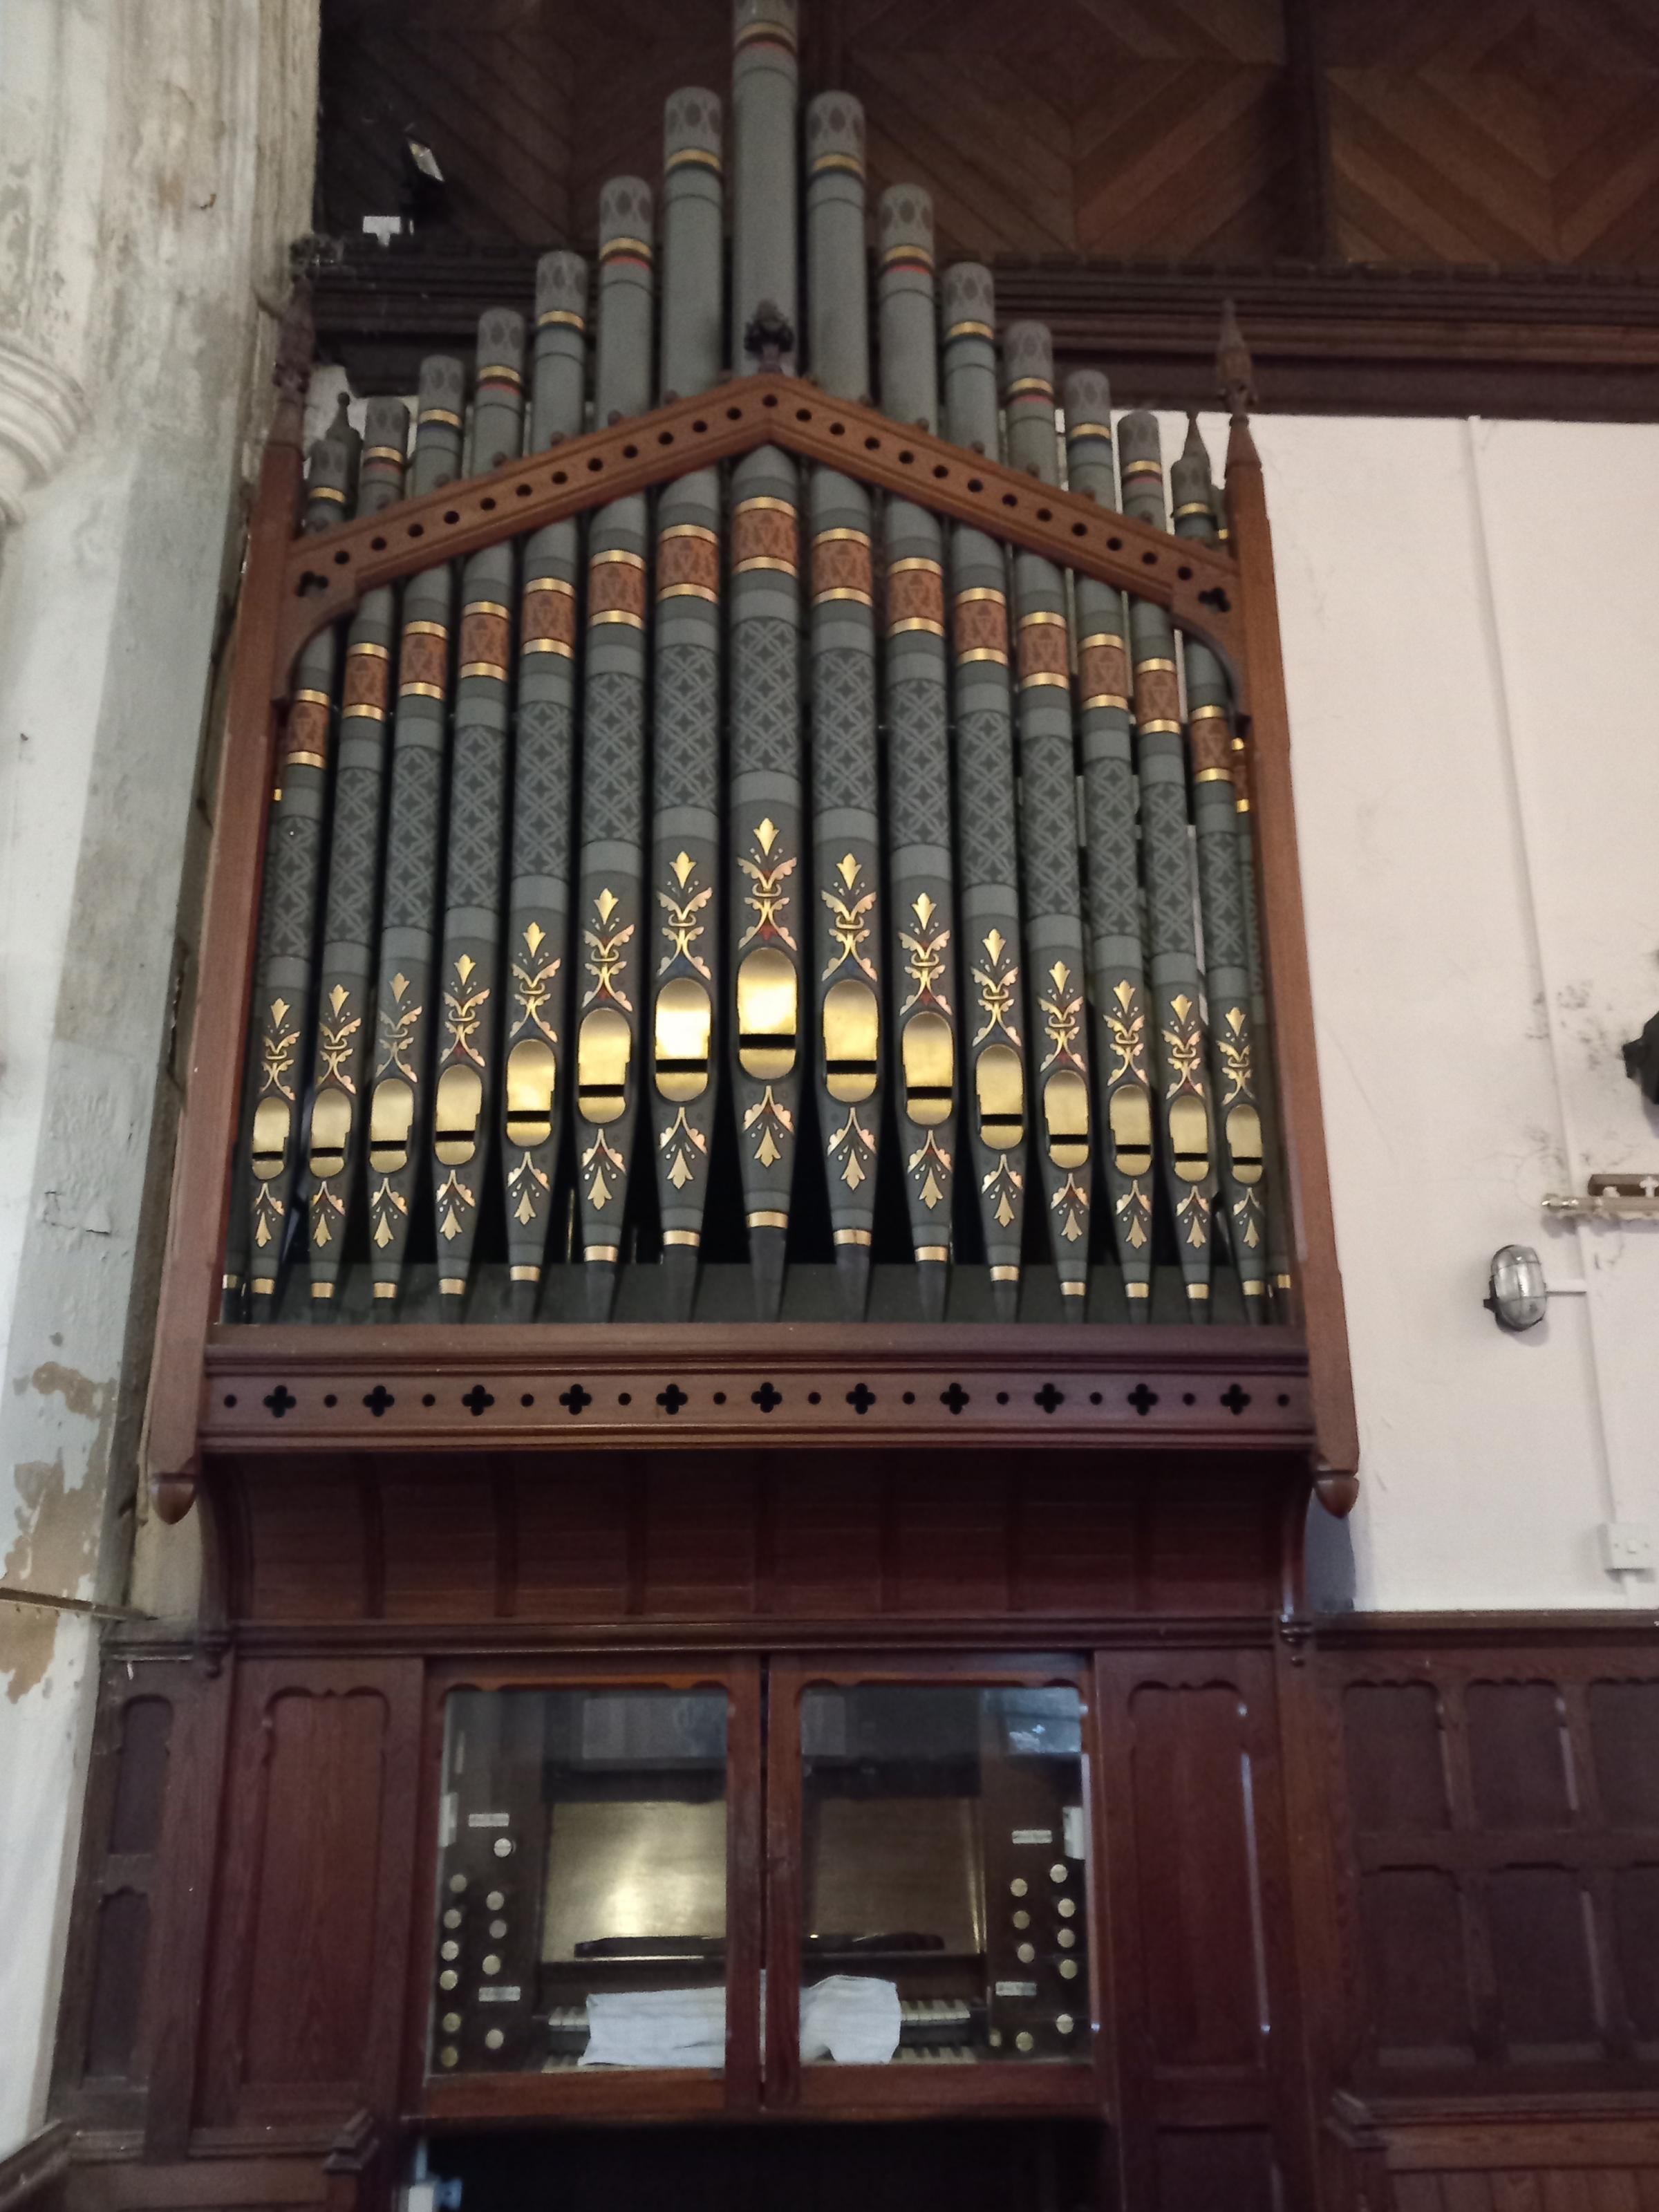 Impressive pipe organ to be retained - Menai Bridge Presbyterian Church renovation (Image Dale Spridgeon)